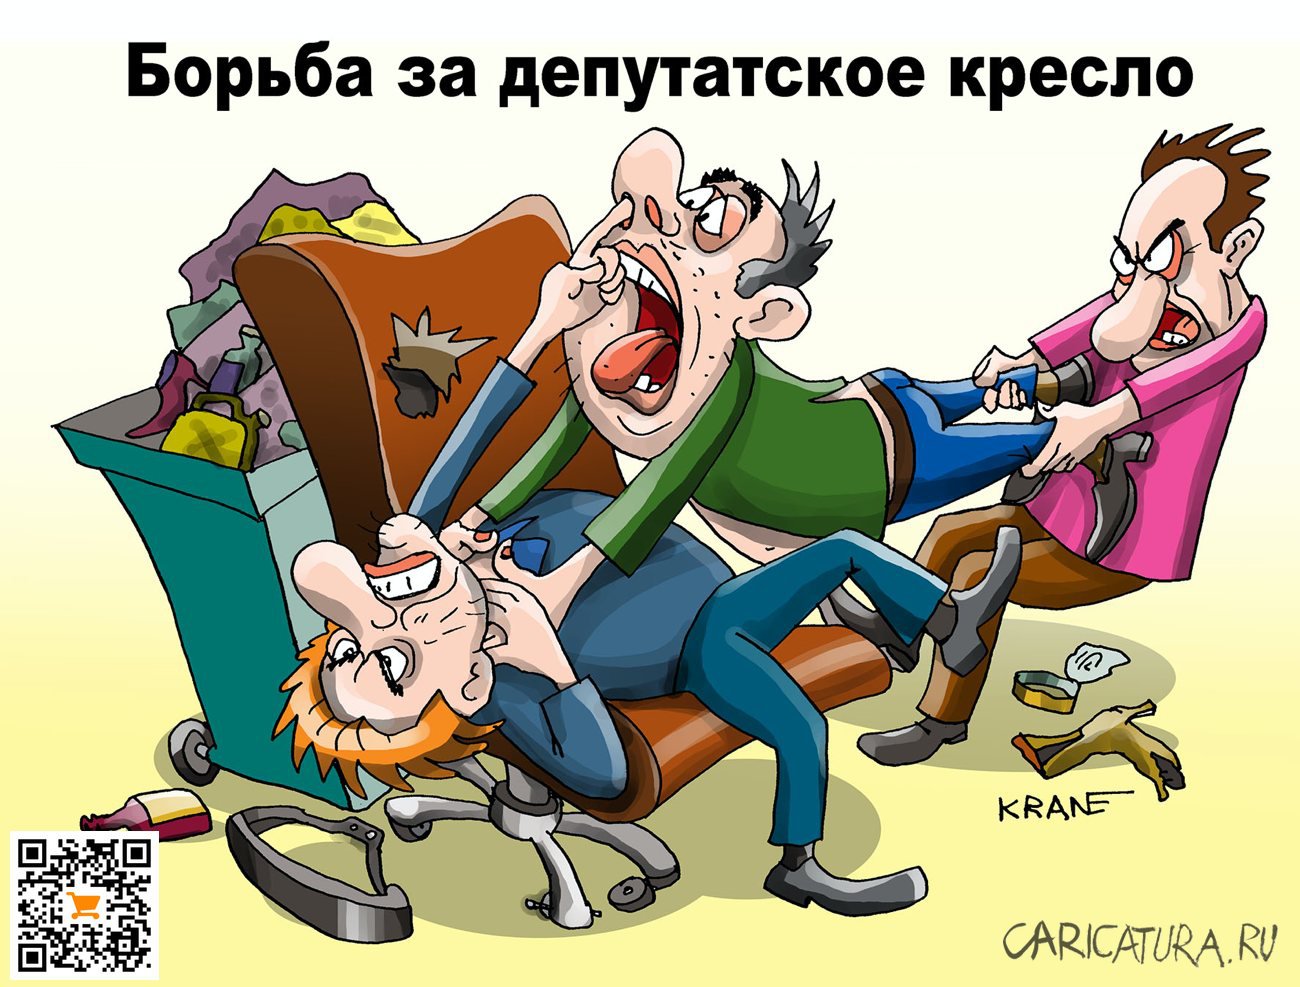 Карикатура "Борьба за депутатское кресло", Евгений Кран